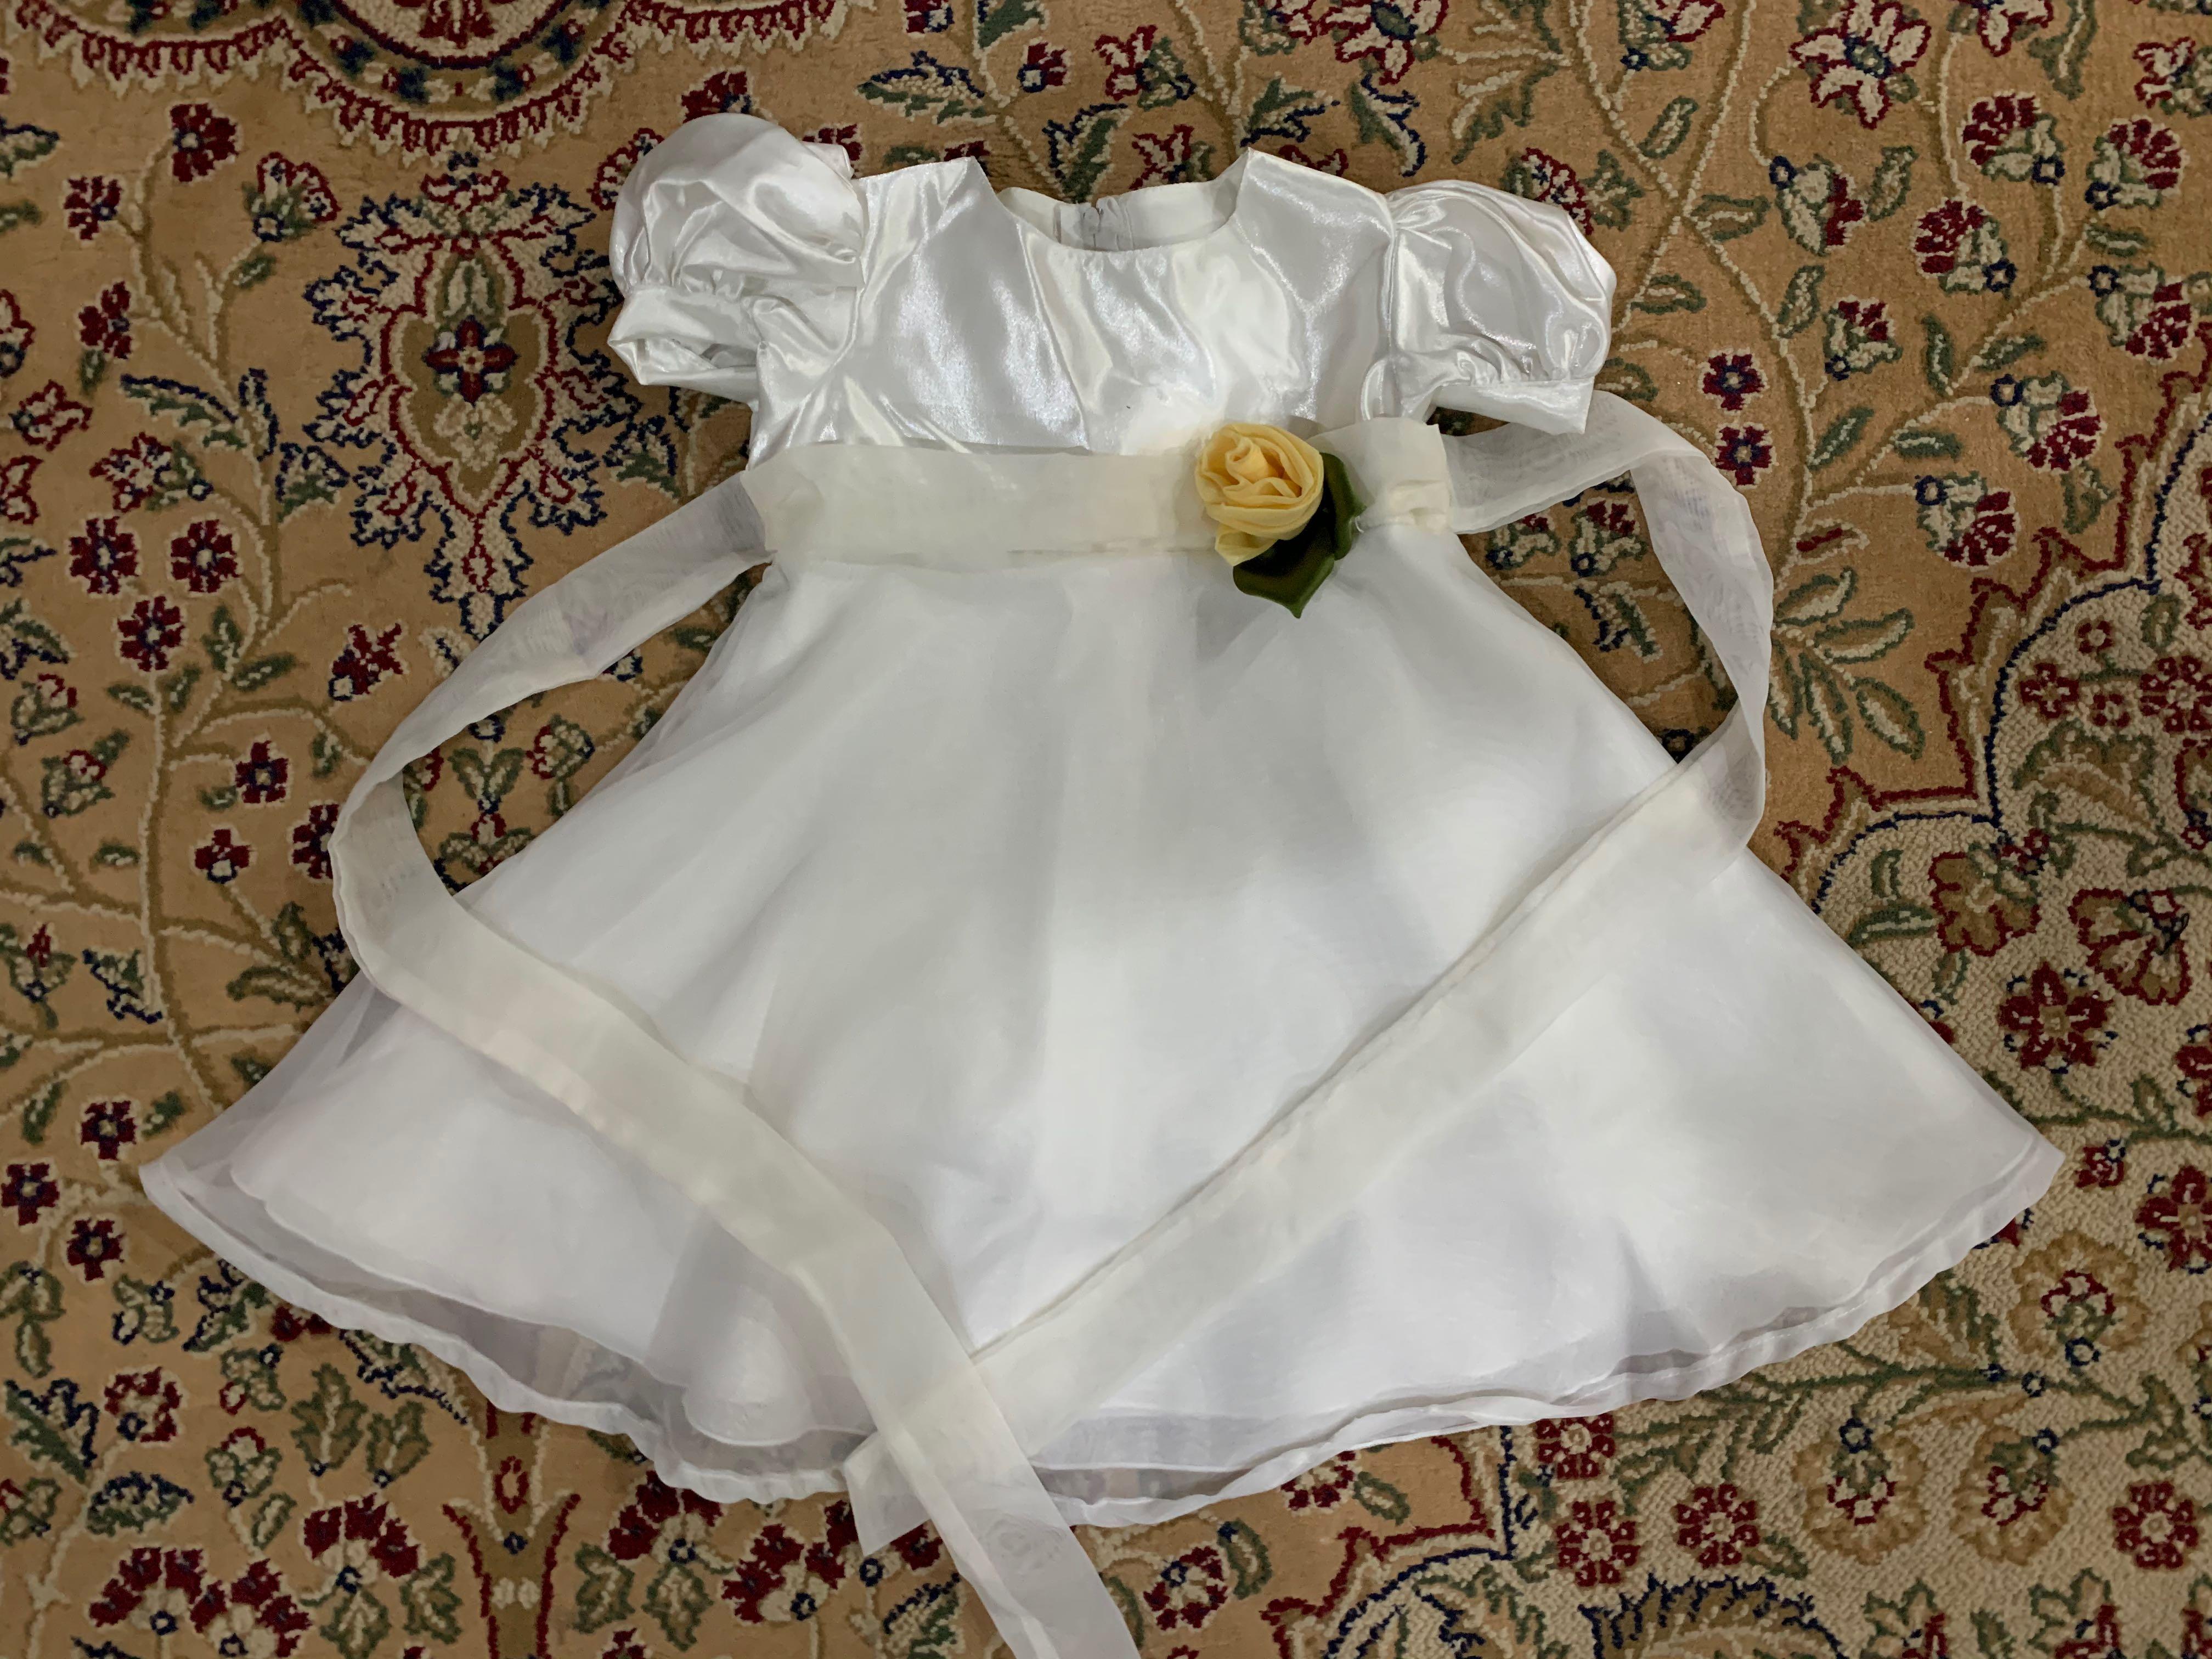 babies white dress